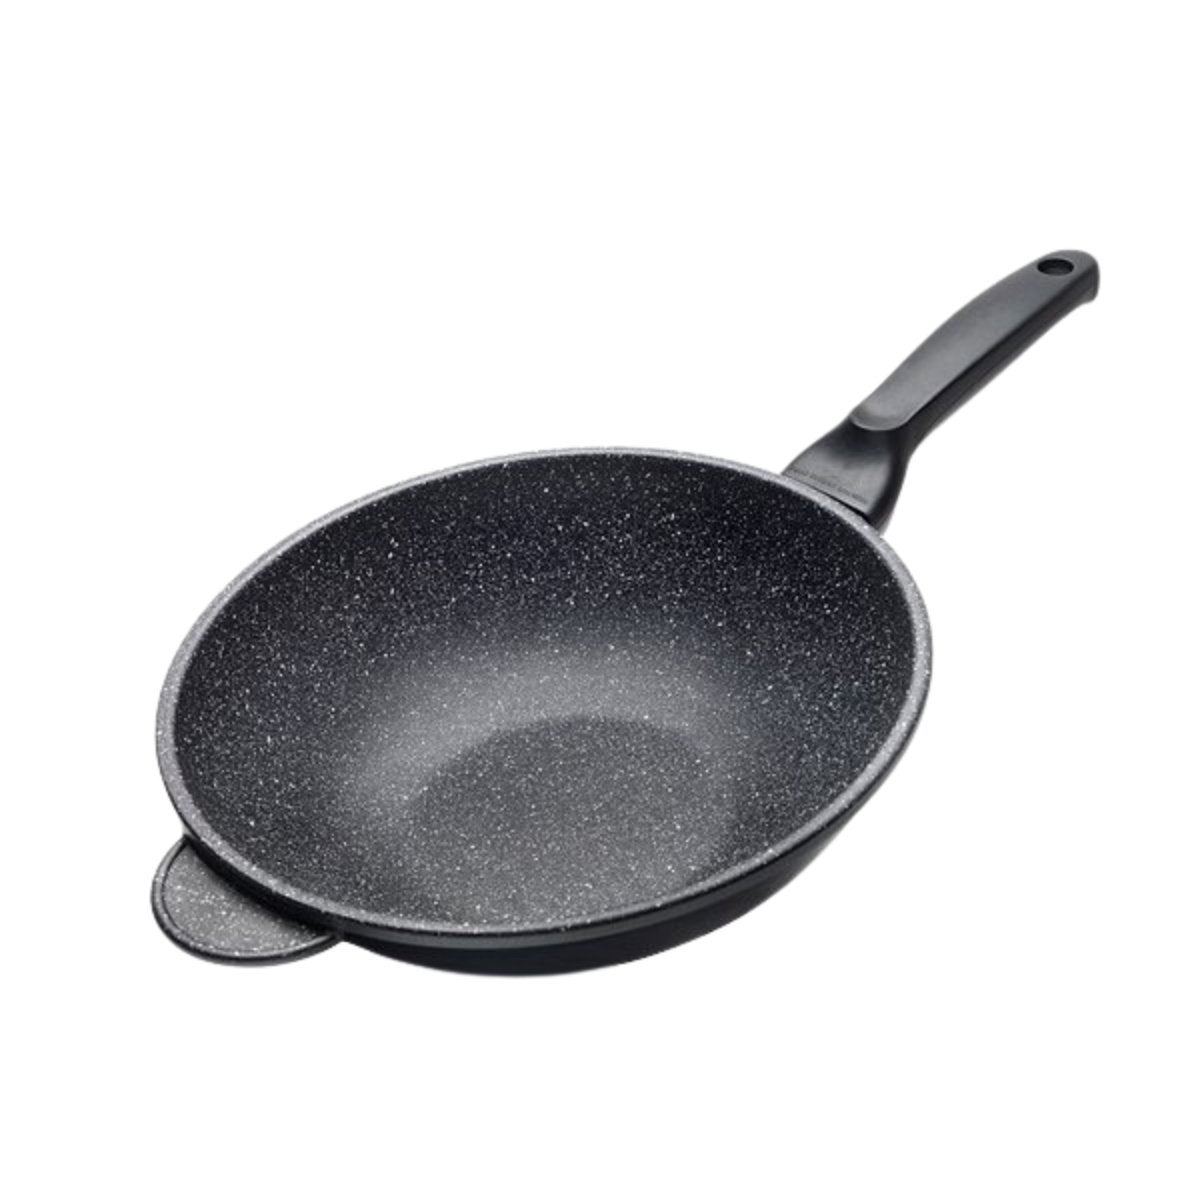 granito; wok pan; nonstick; αντικολλητικό; risoli; mayestic